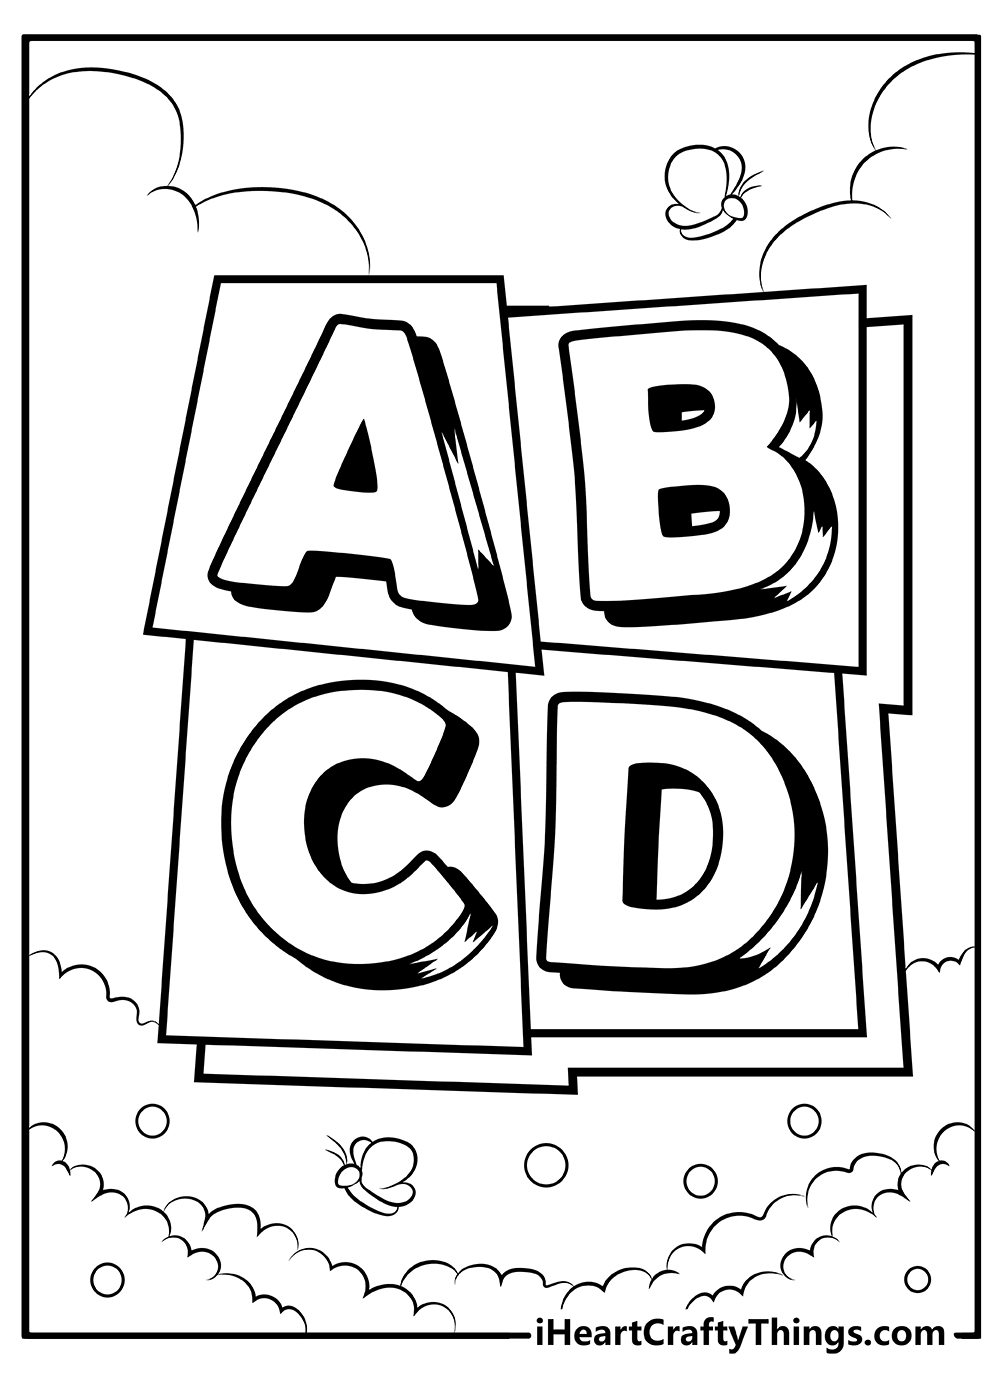 A B C D Alphabet Coloring Pages free download